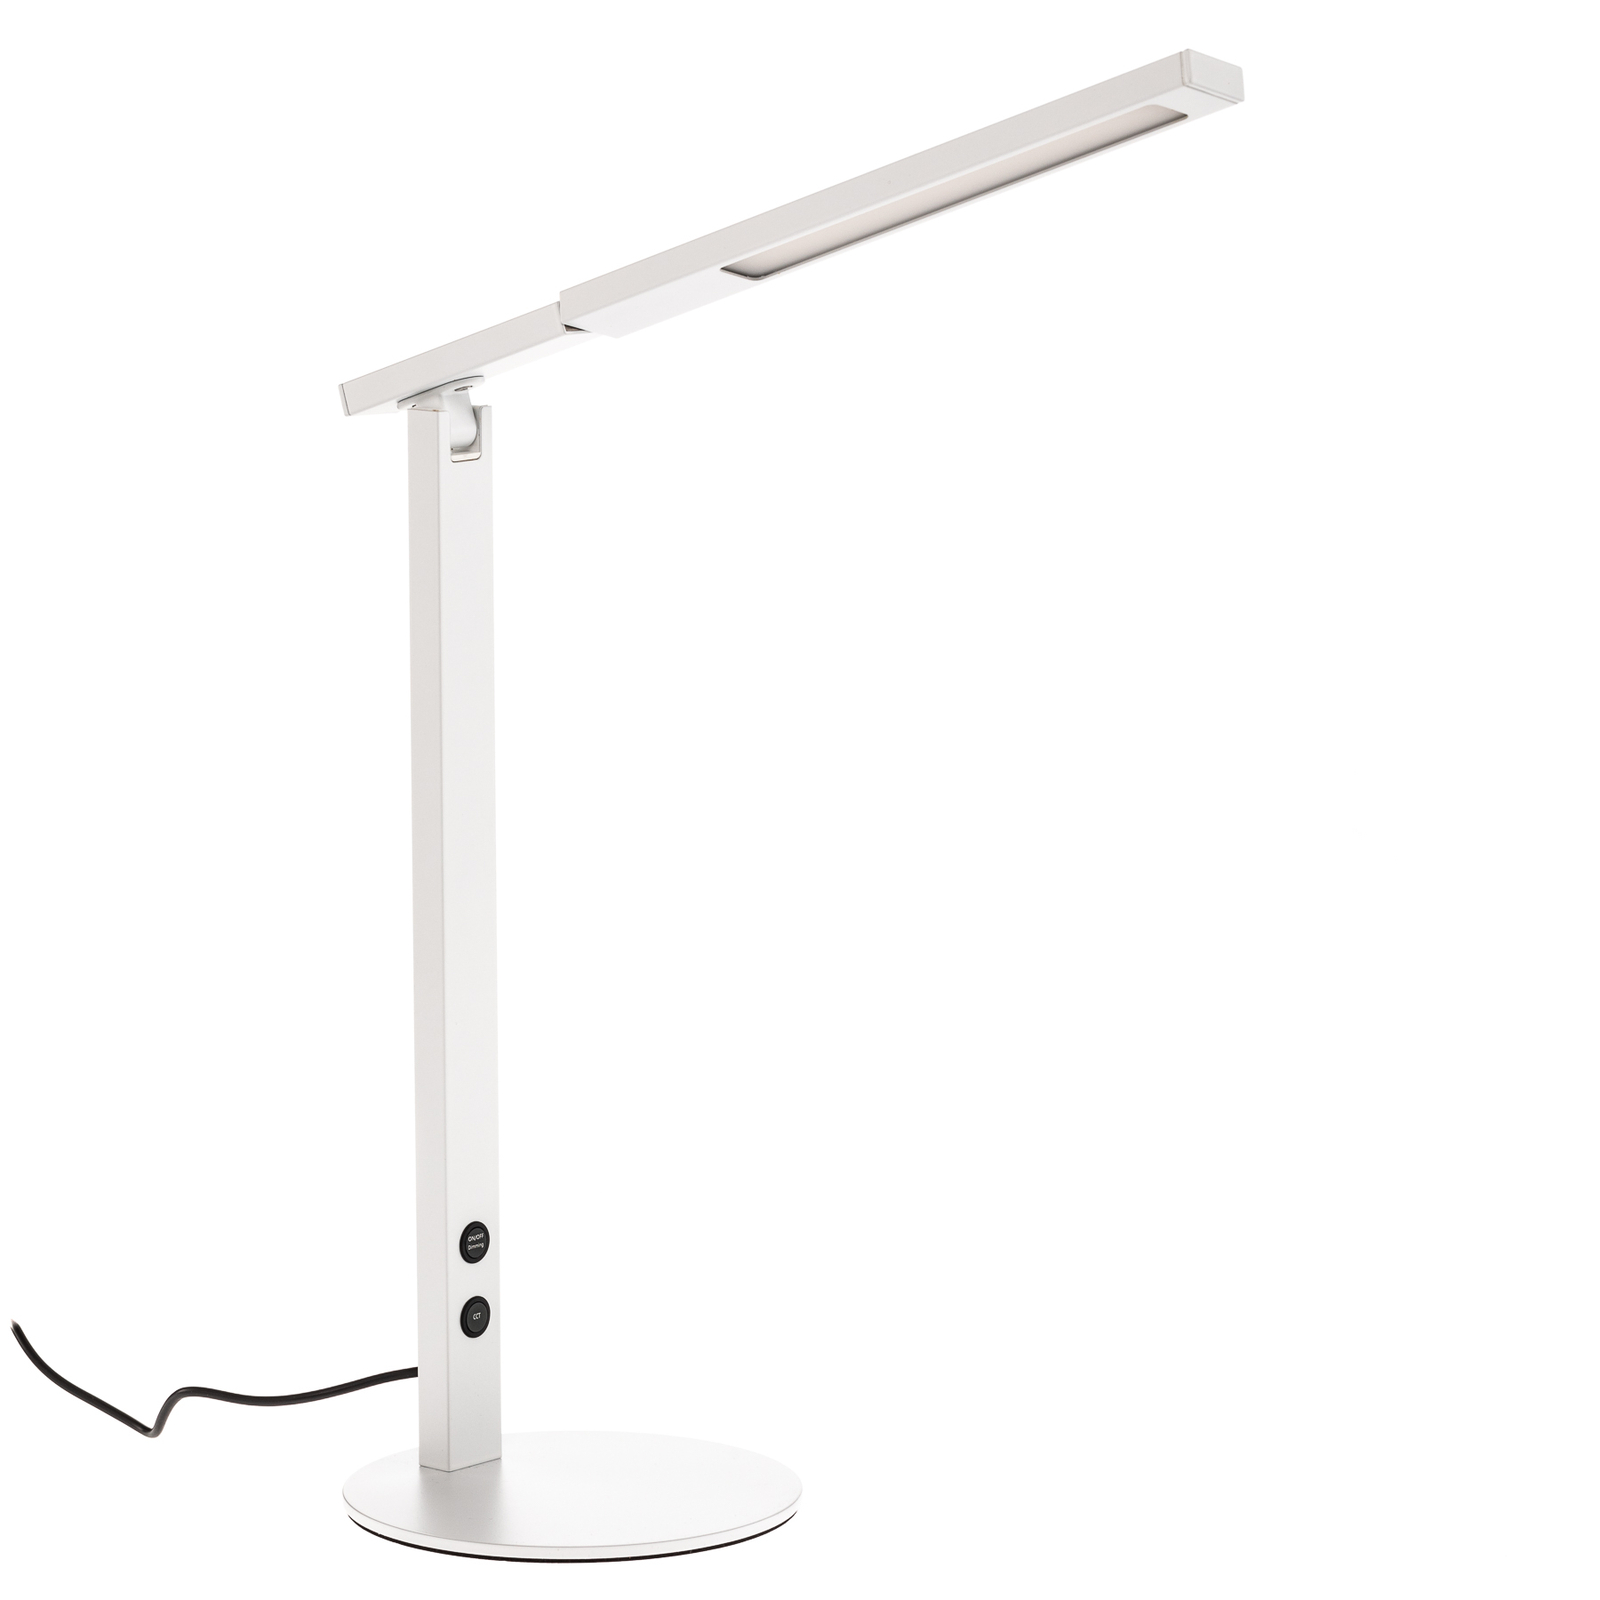 LED bureaulamp Ideal met dimmer, wit